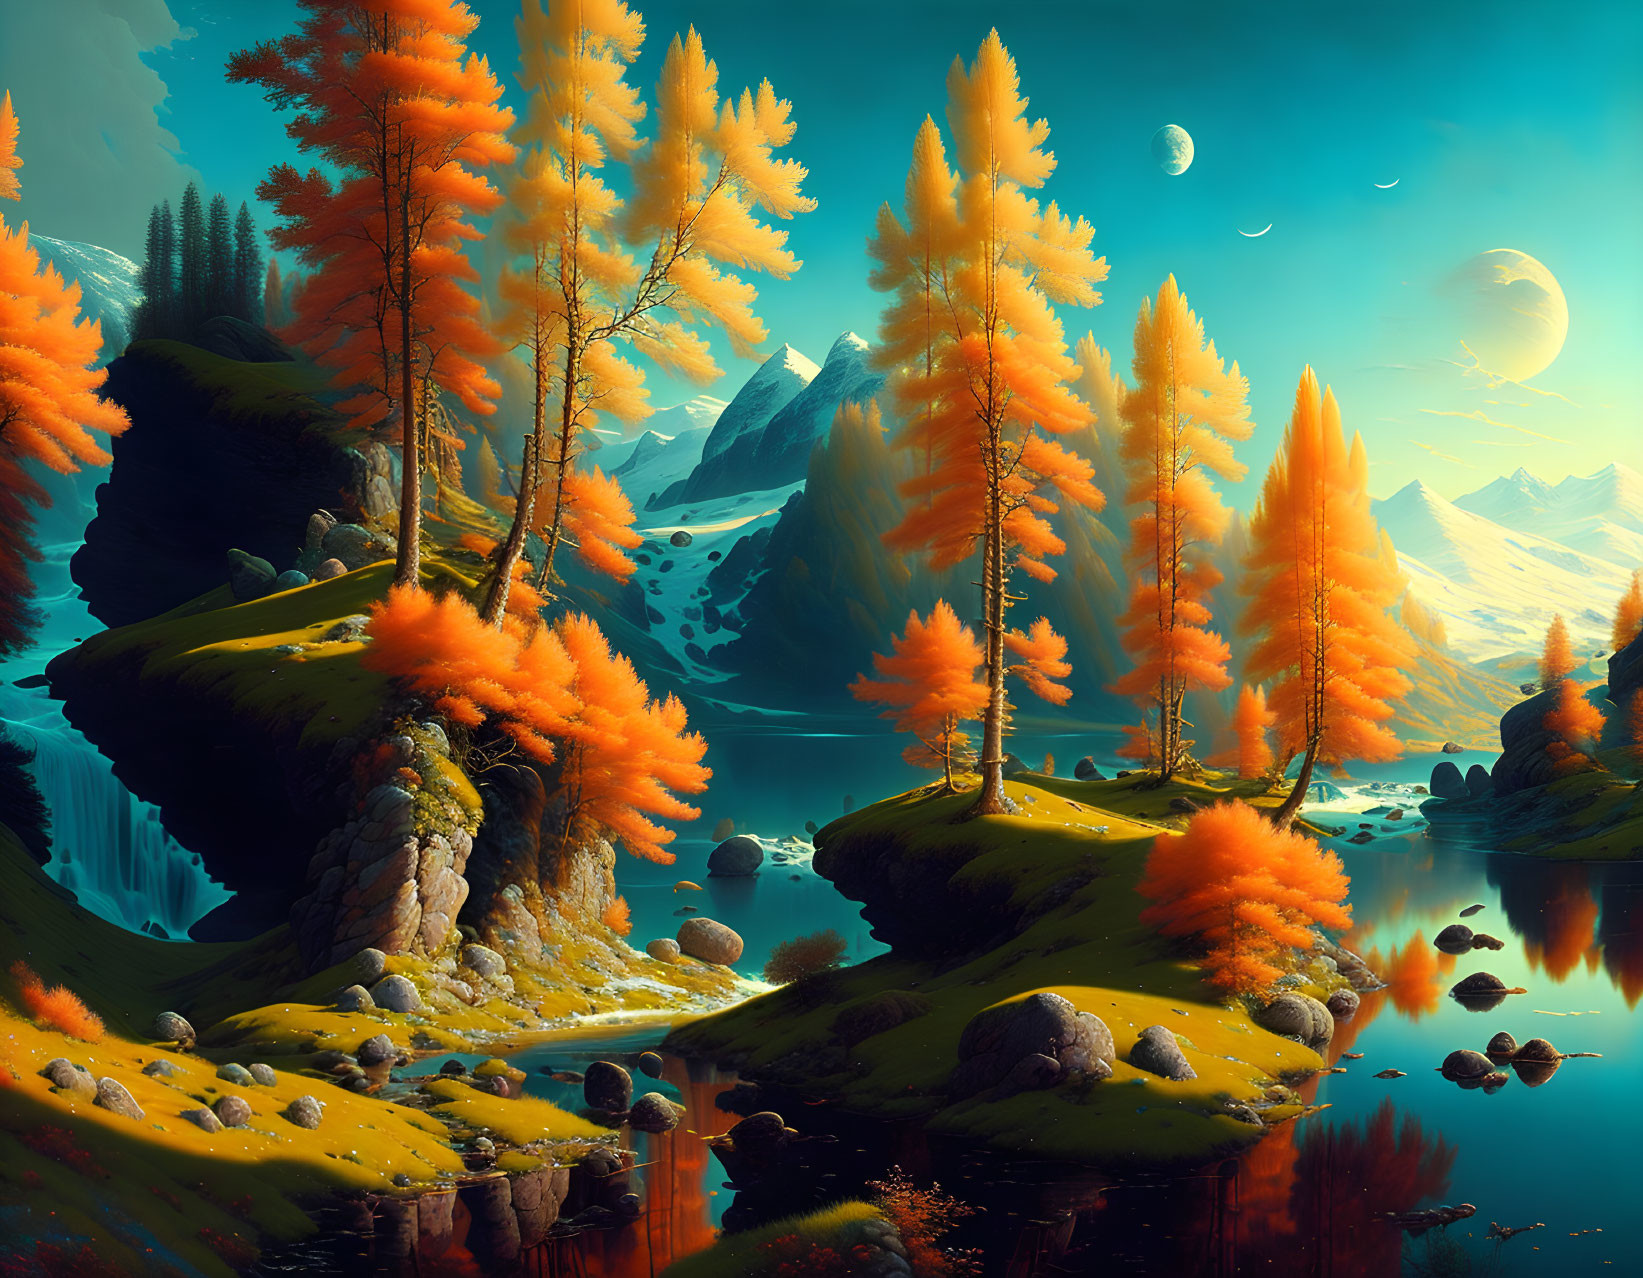 Digital art landscape: fiery orange trees, tranquil lake, waterfalls, distant mountains, two moons in